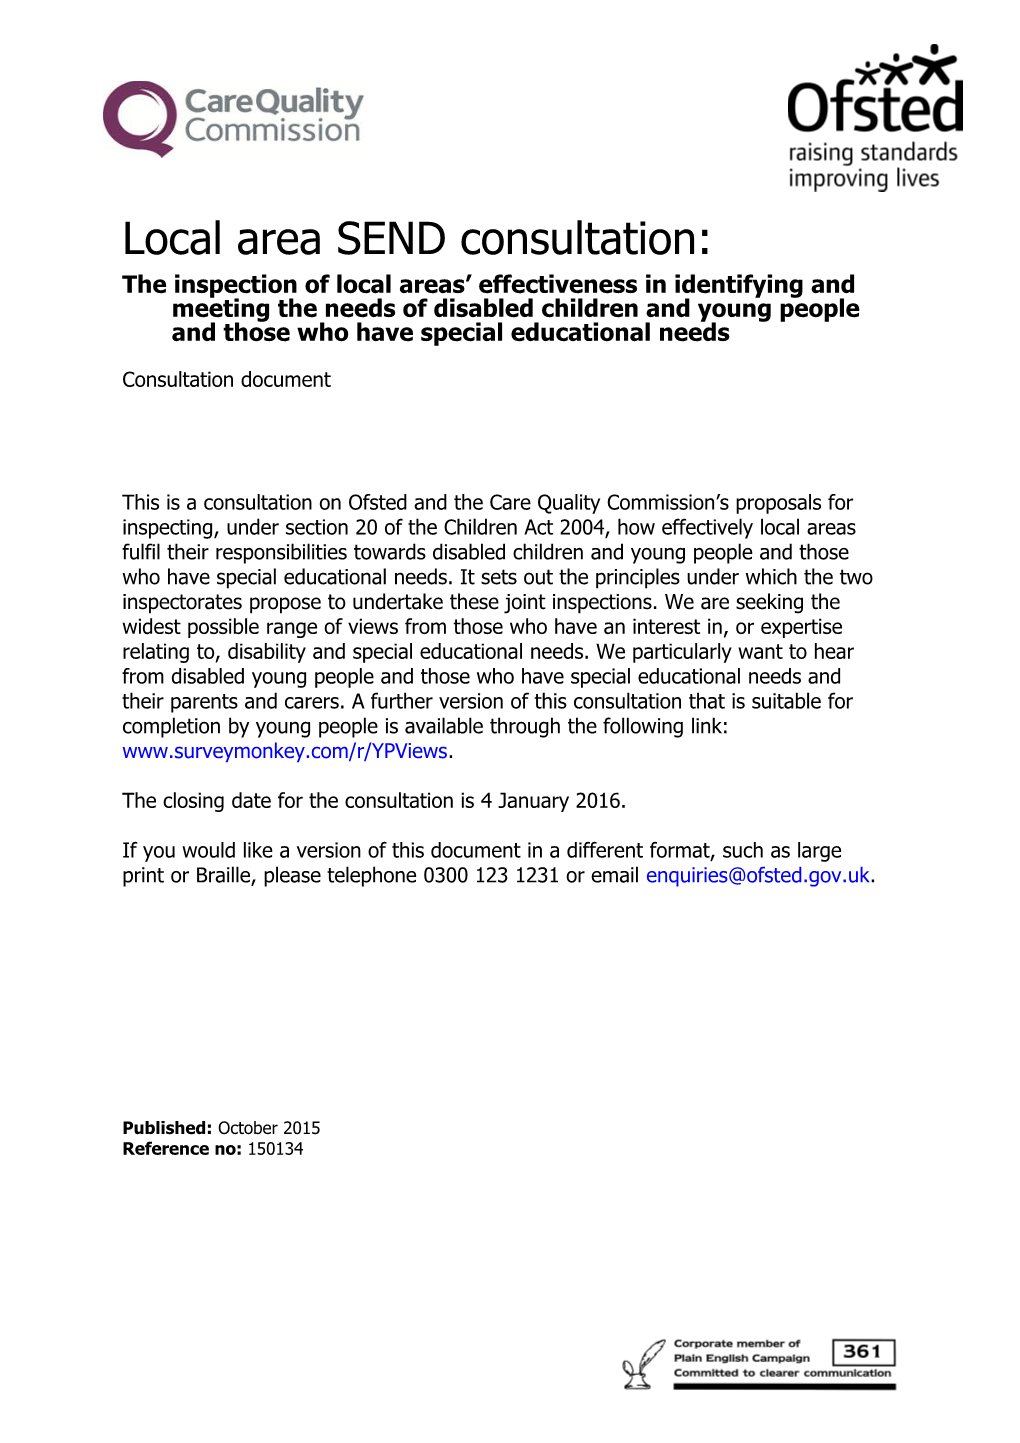 Local Area SEND Consultation